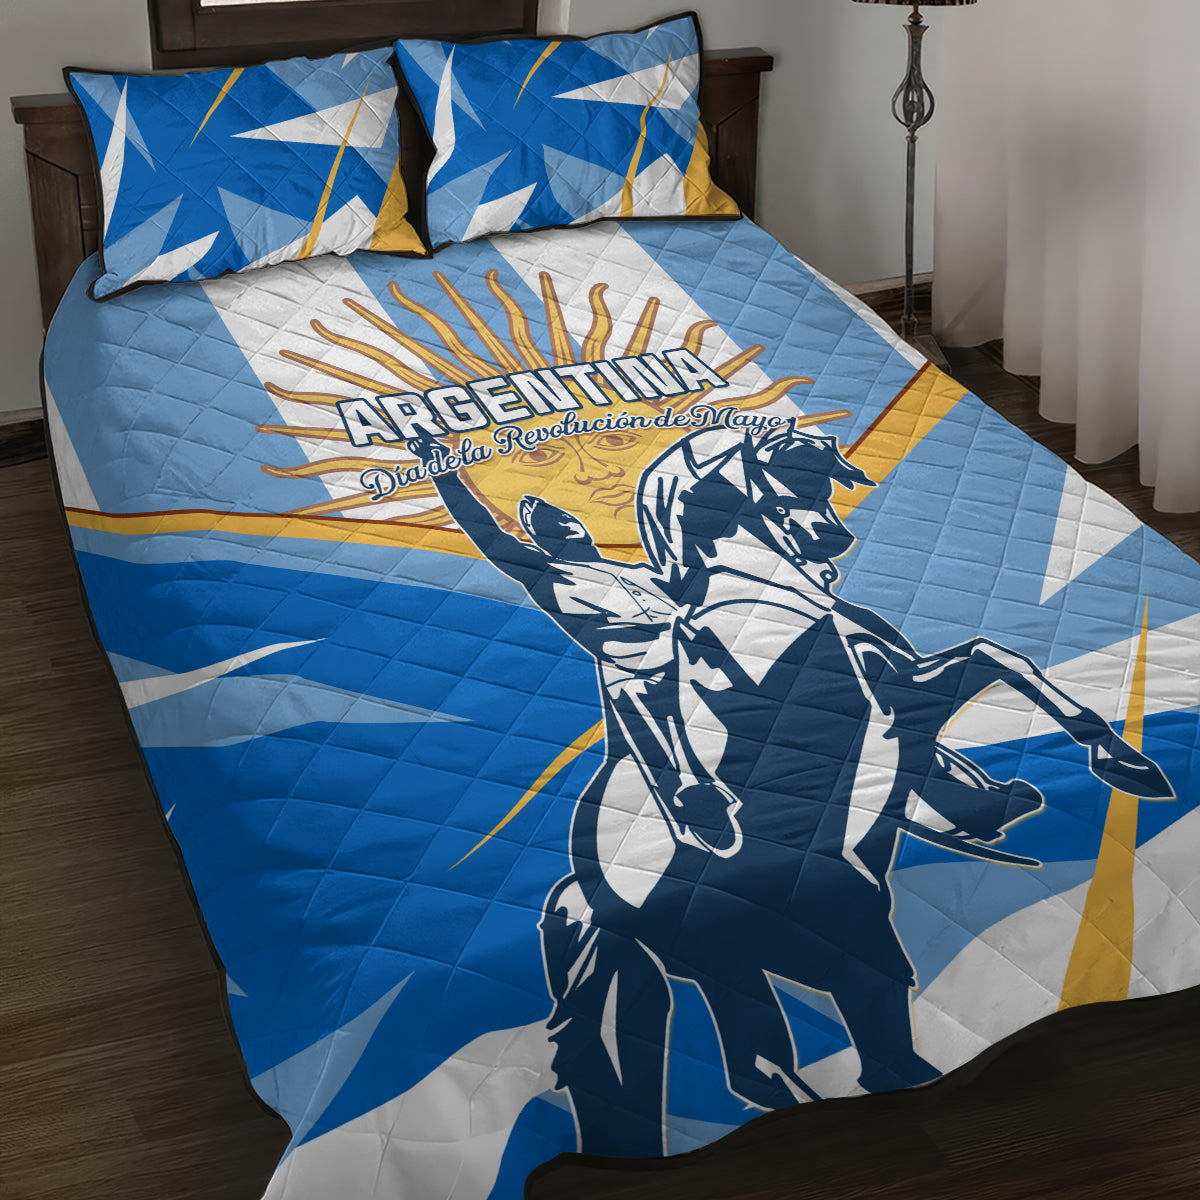 Argentina Revolution Day Quilt Bed Set Sol de Mayo Warrior